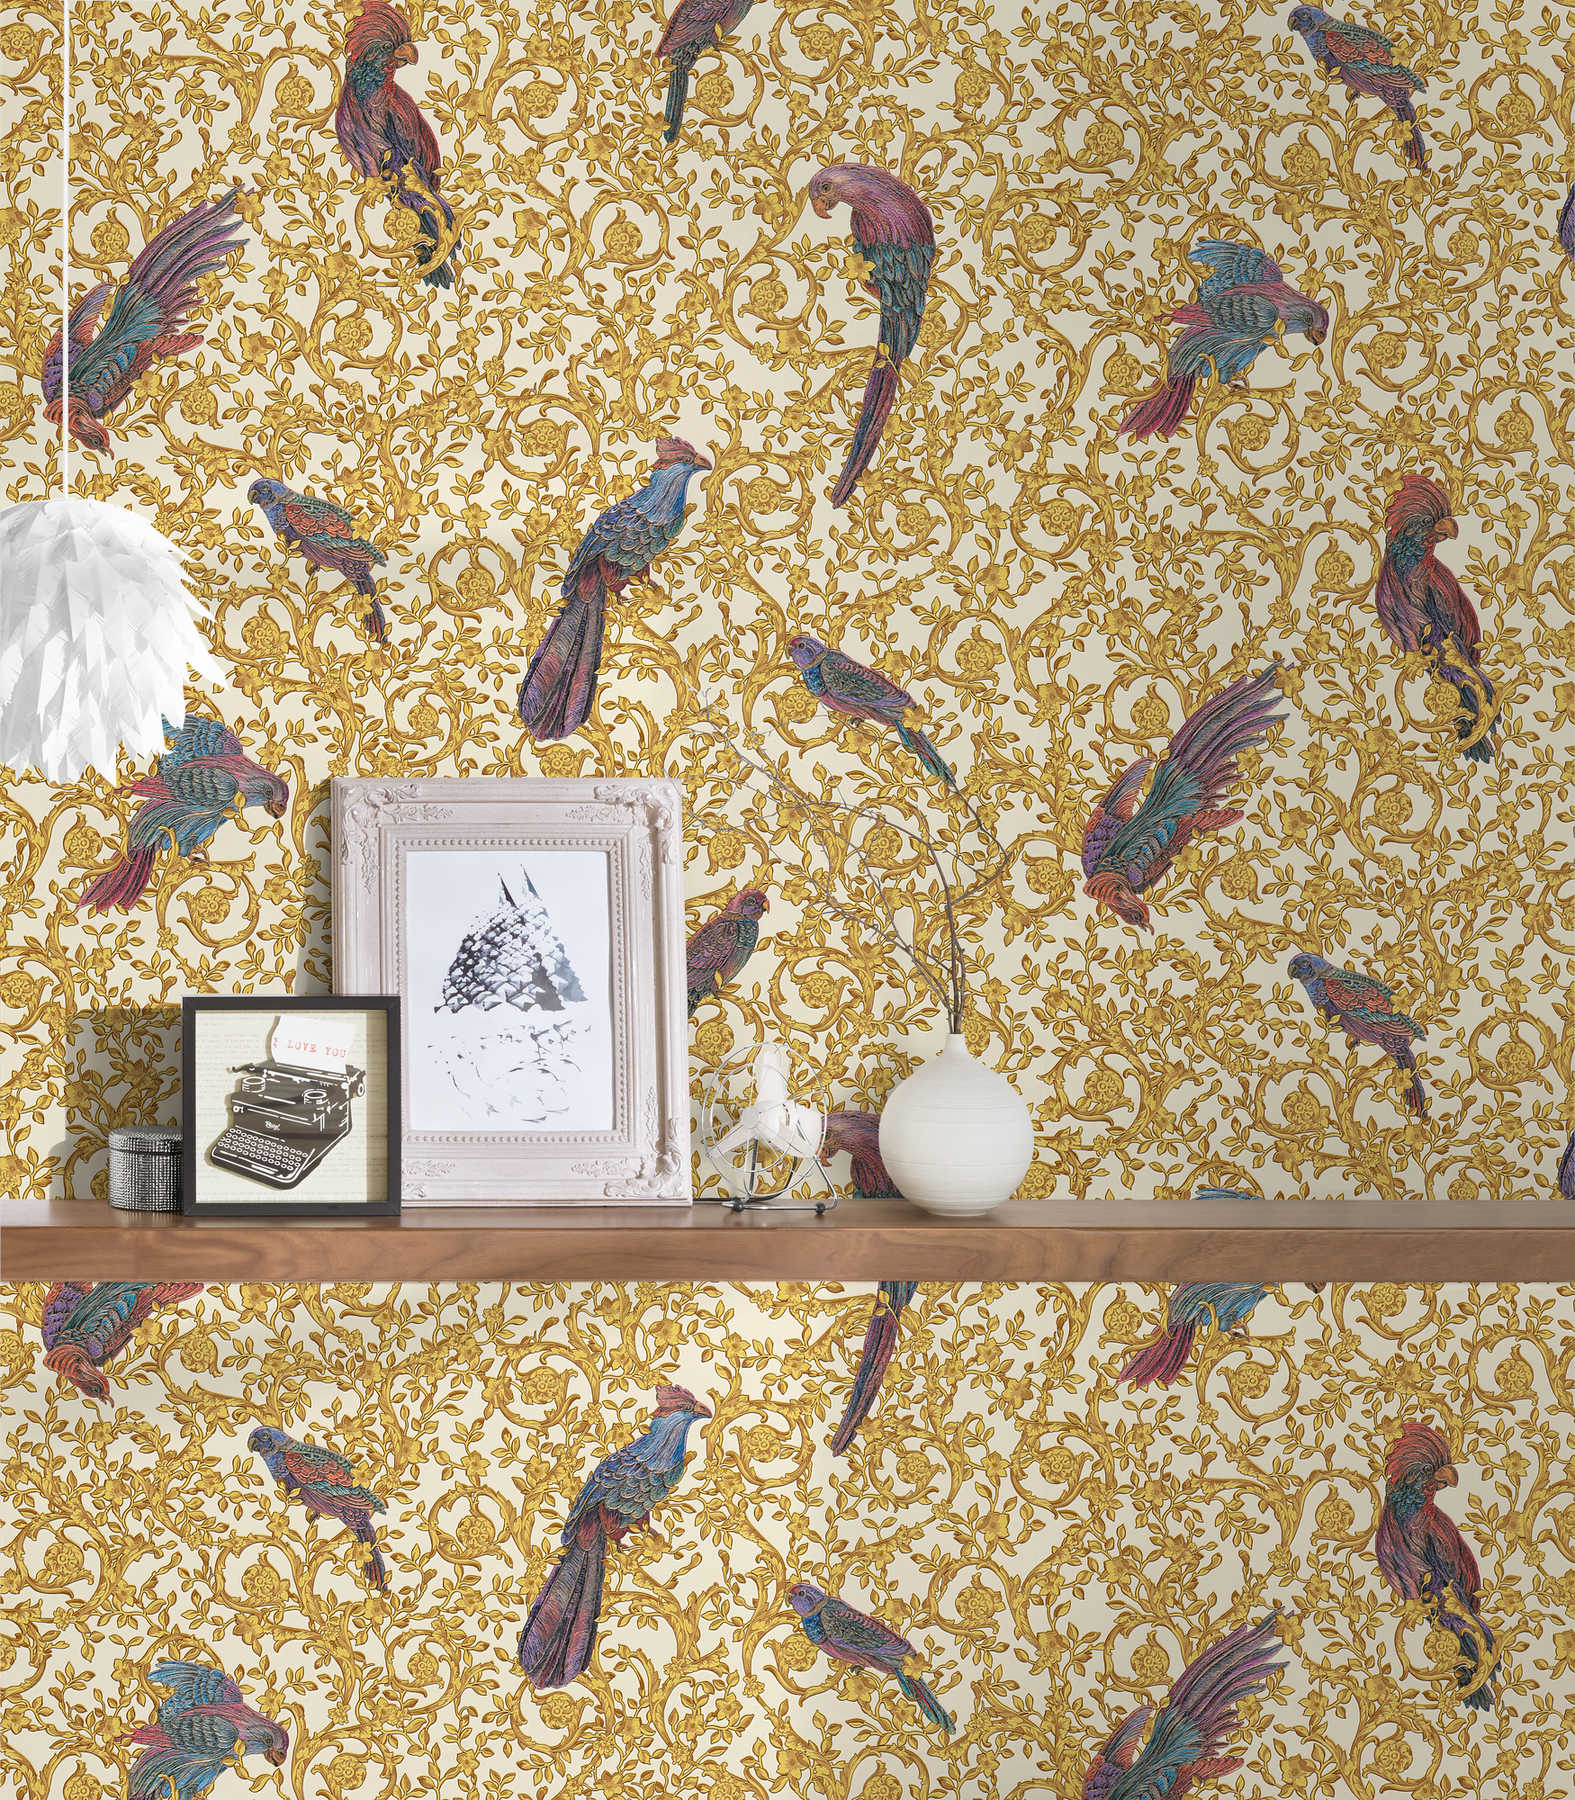             VERSACE Home behang paradise birds & gouden accenten - goud, paars, crème
        